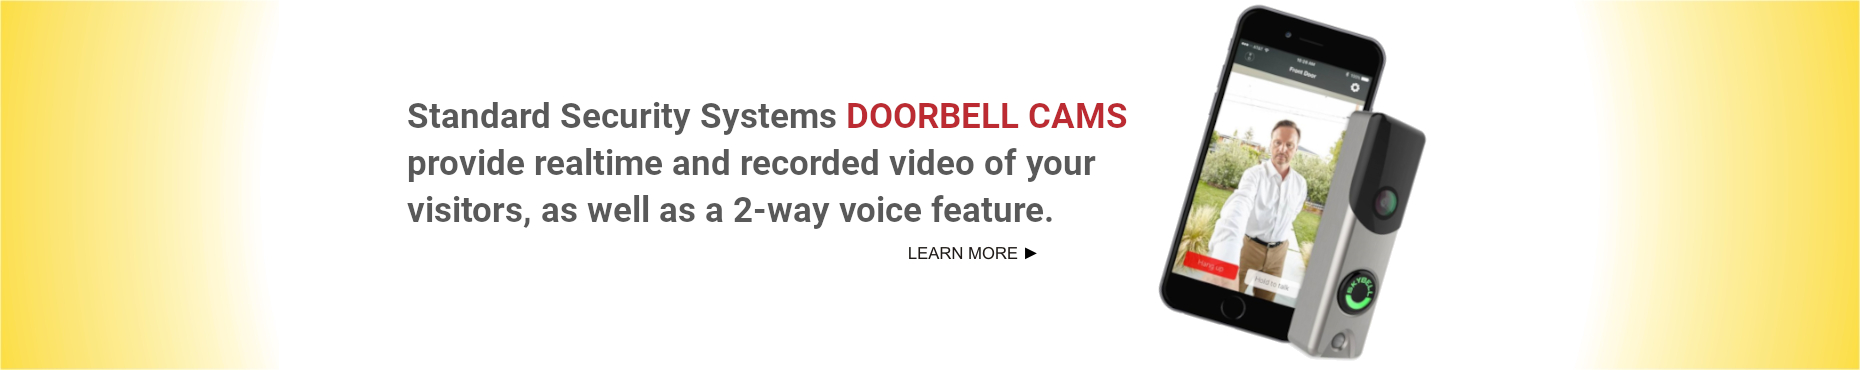 A video doorbell helps keep you informed of who is at your door